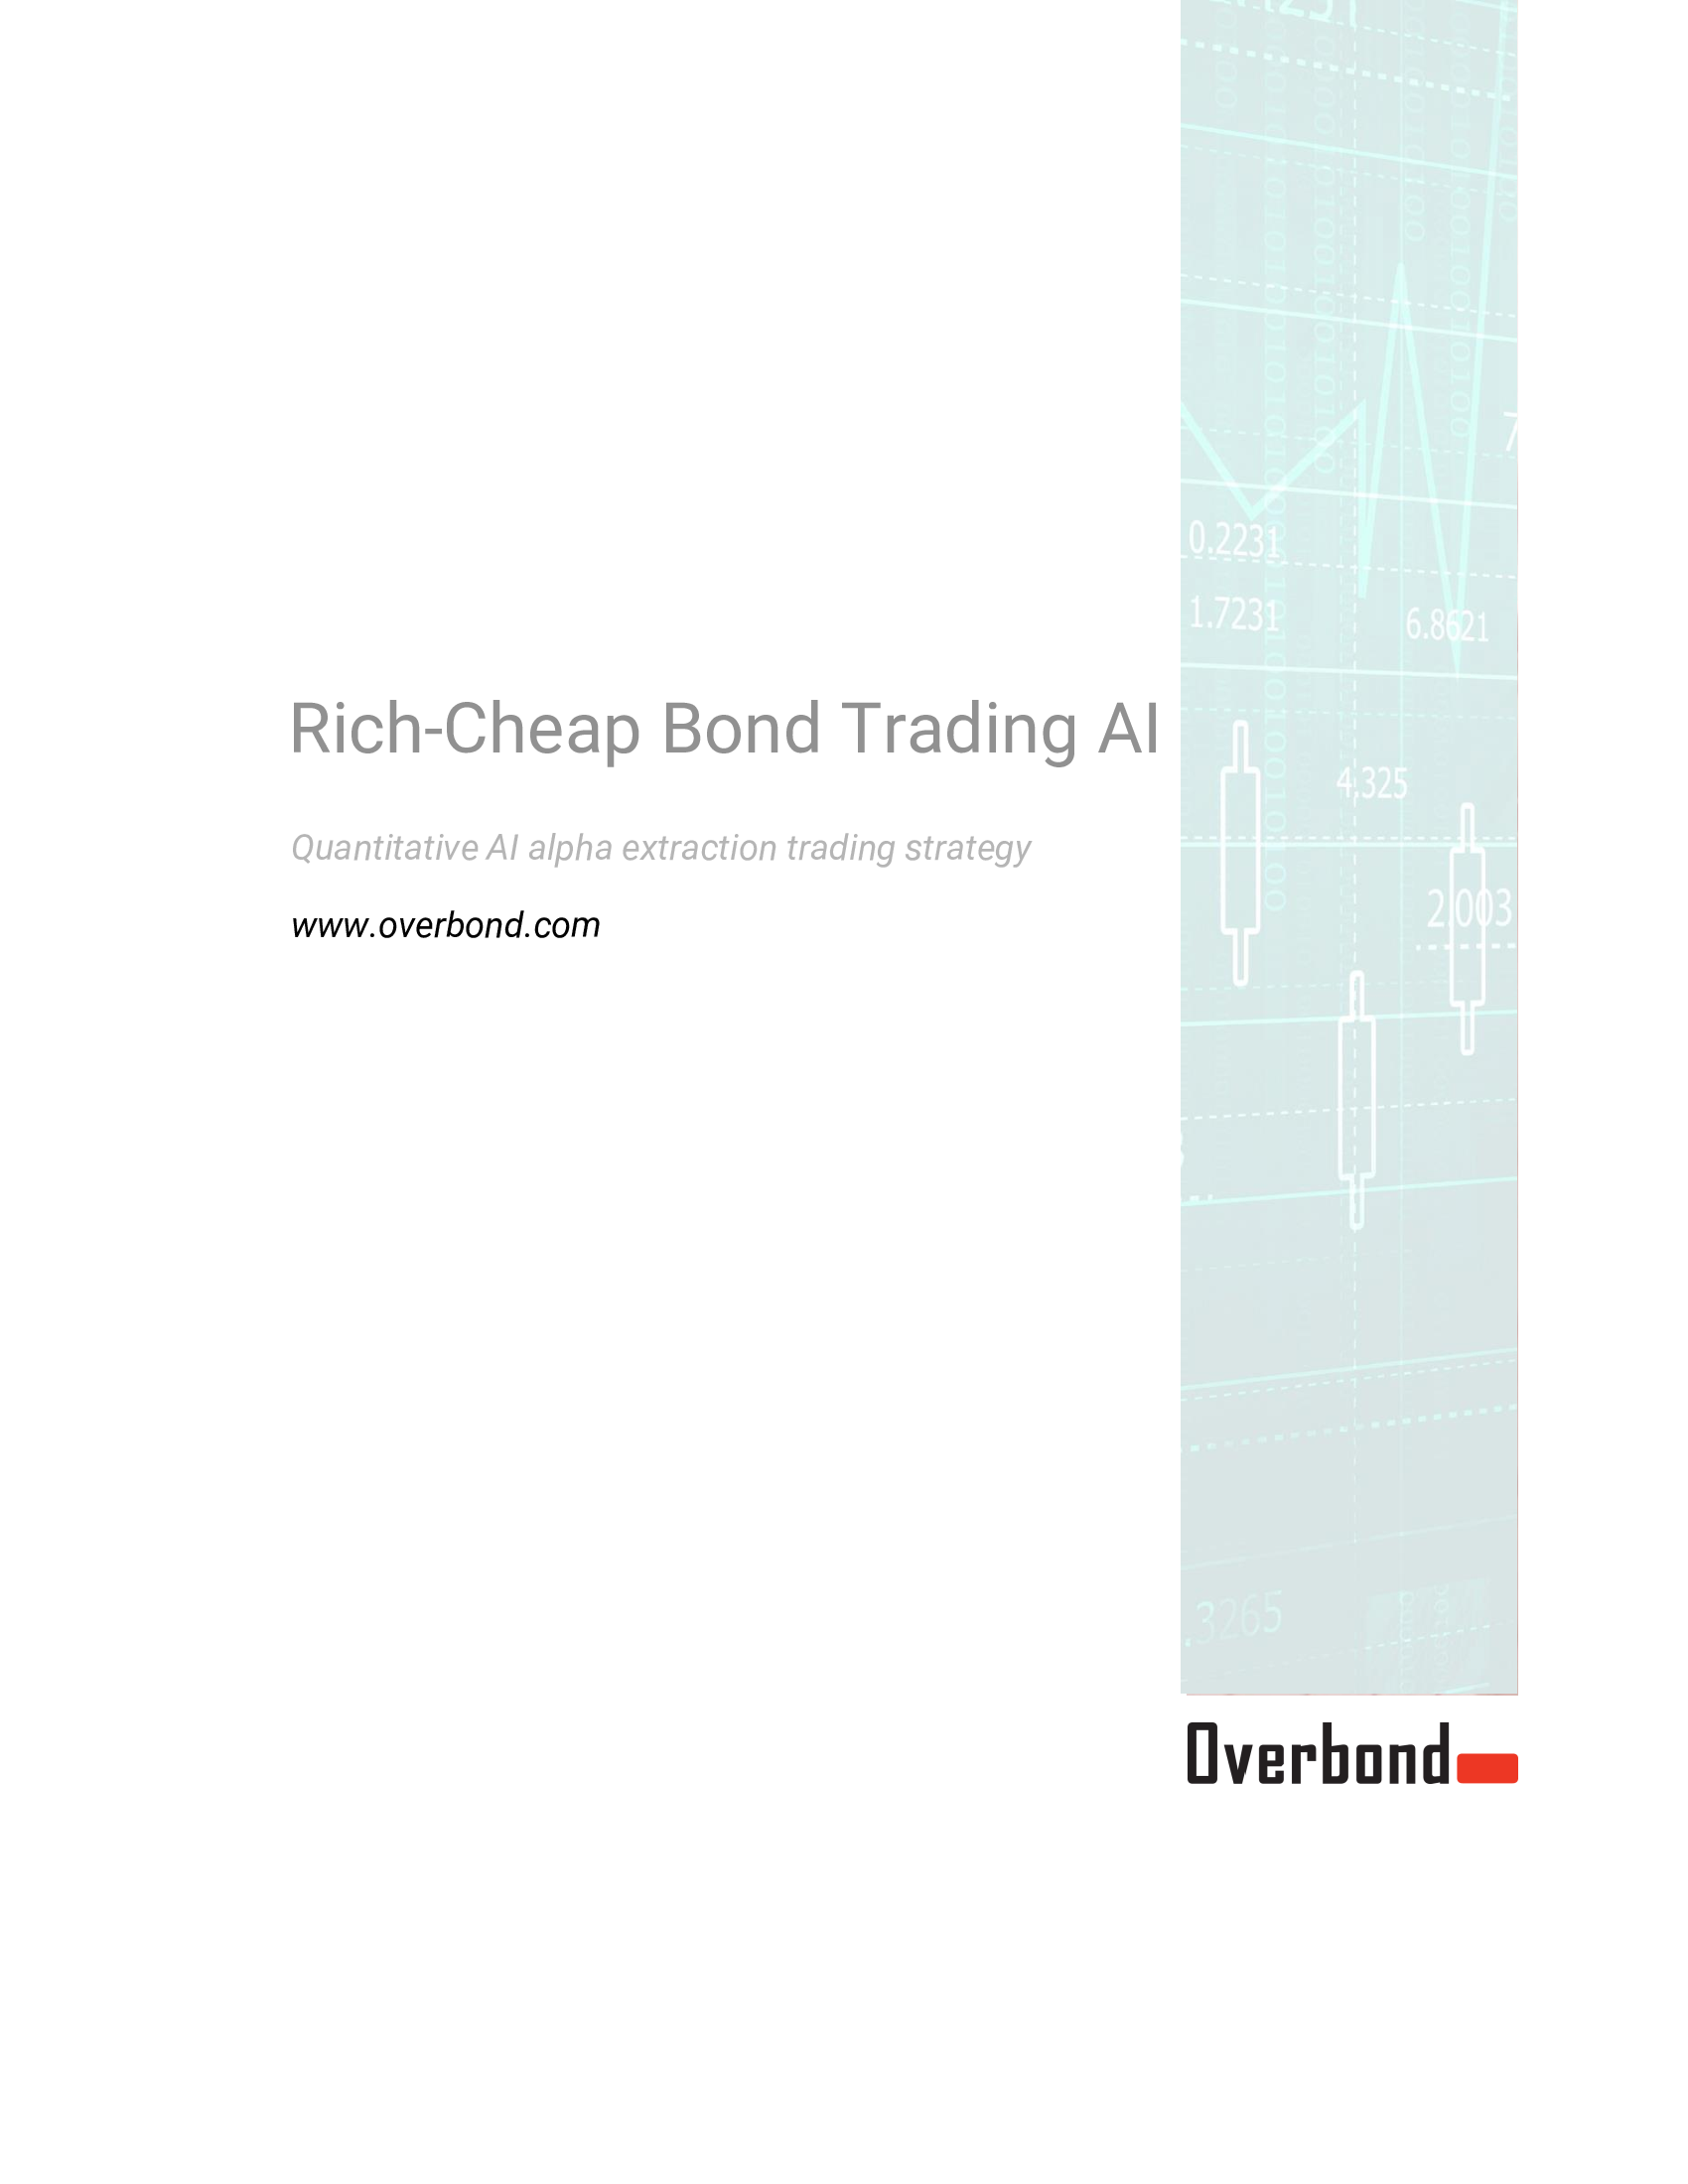 Overbond Rich Cheap Bond Trading Report